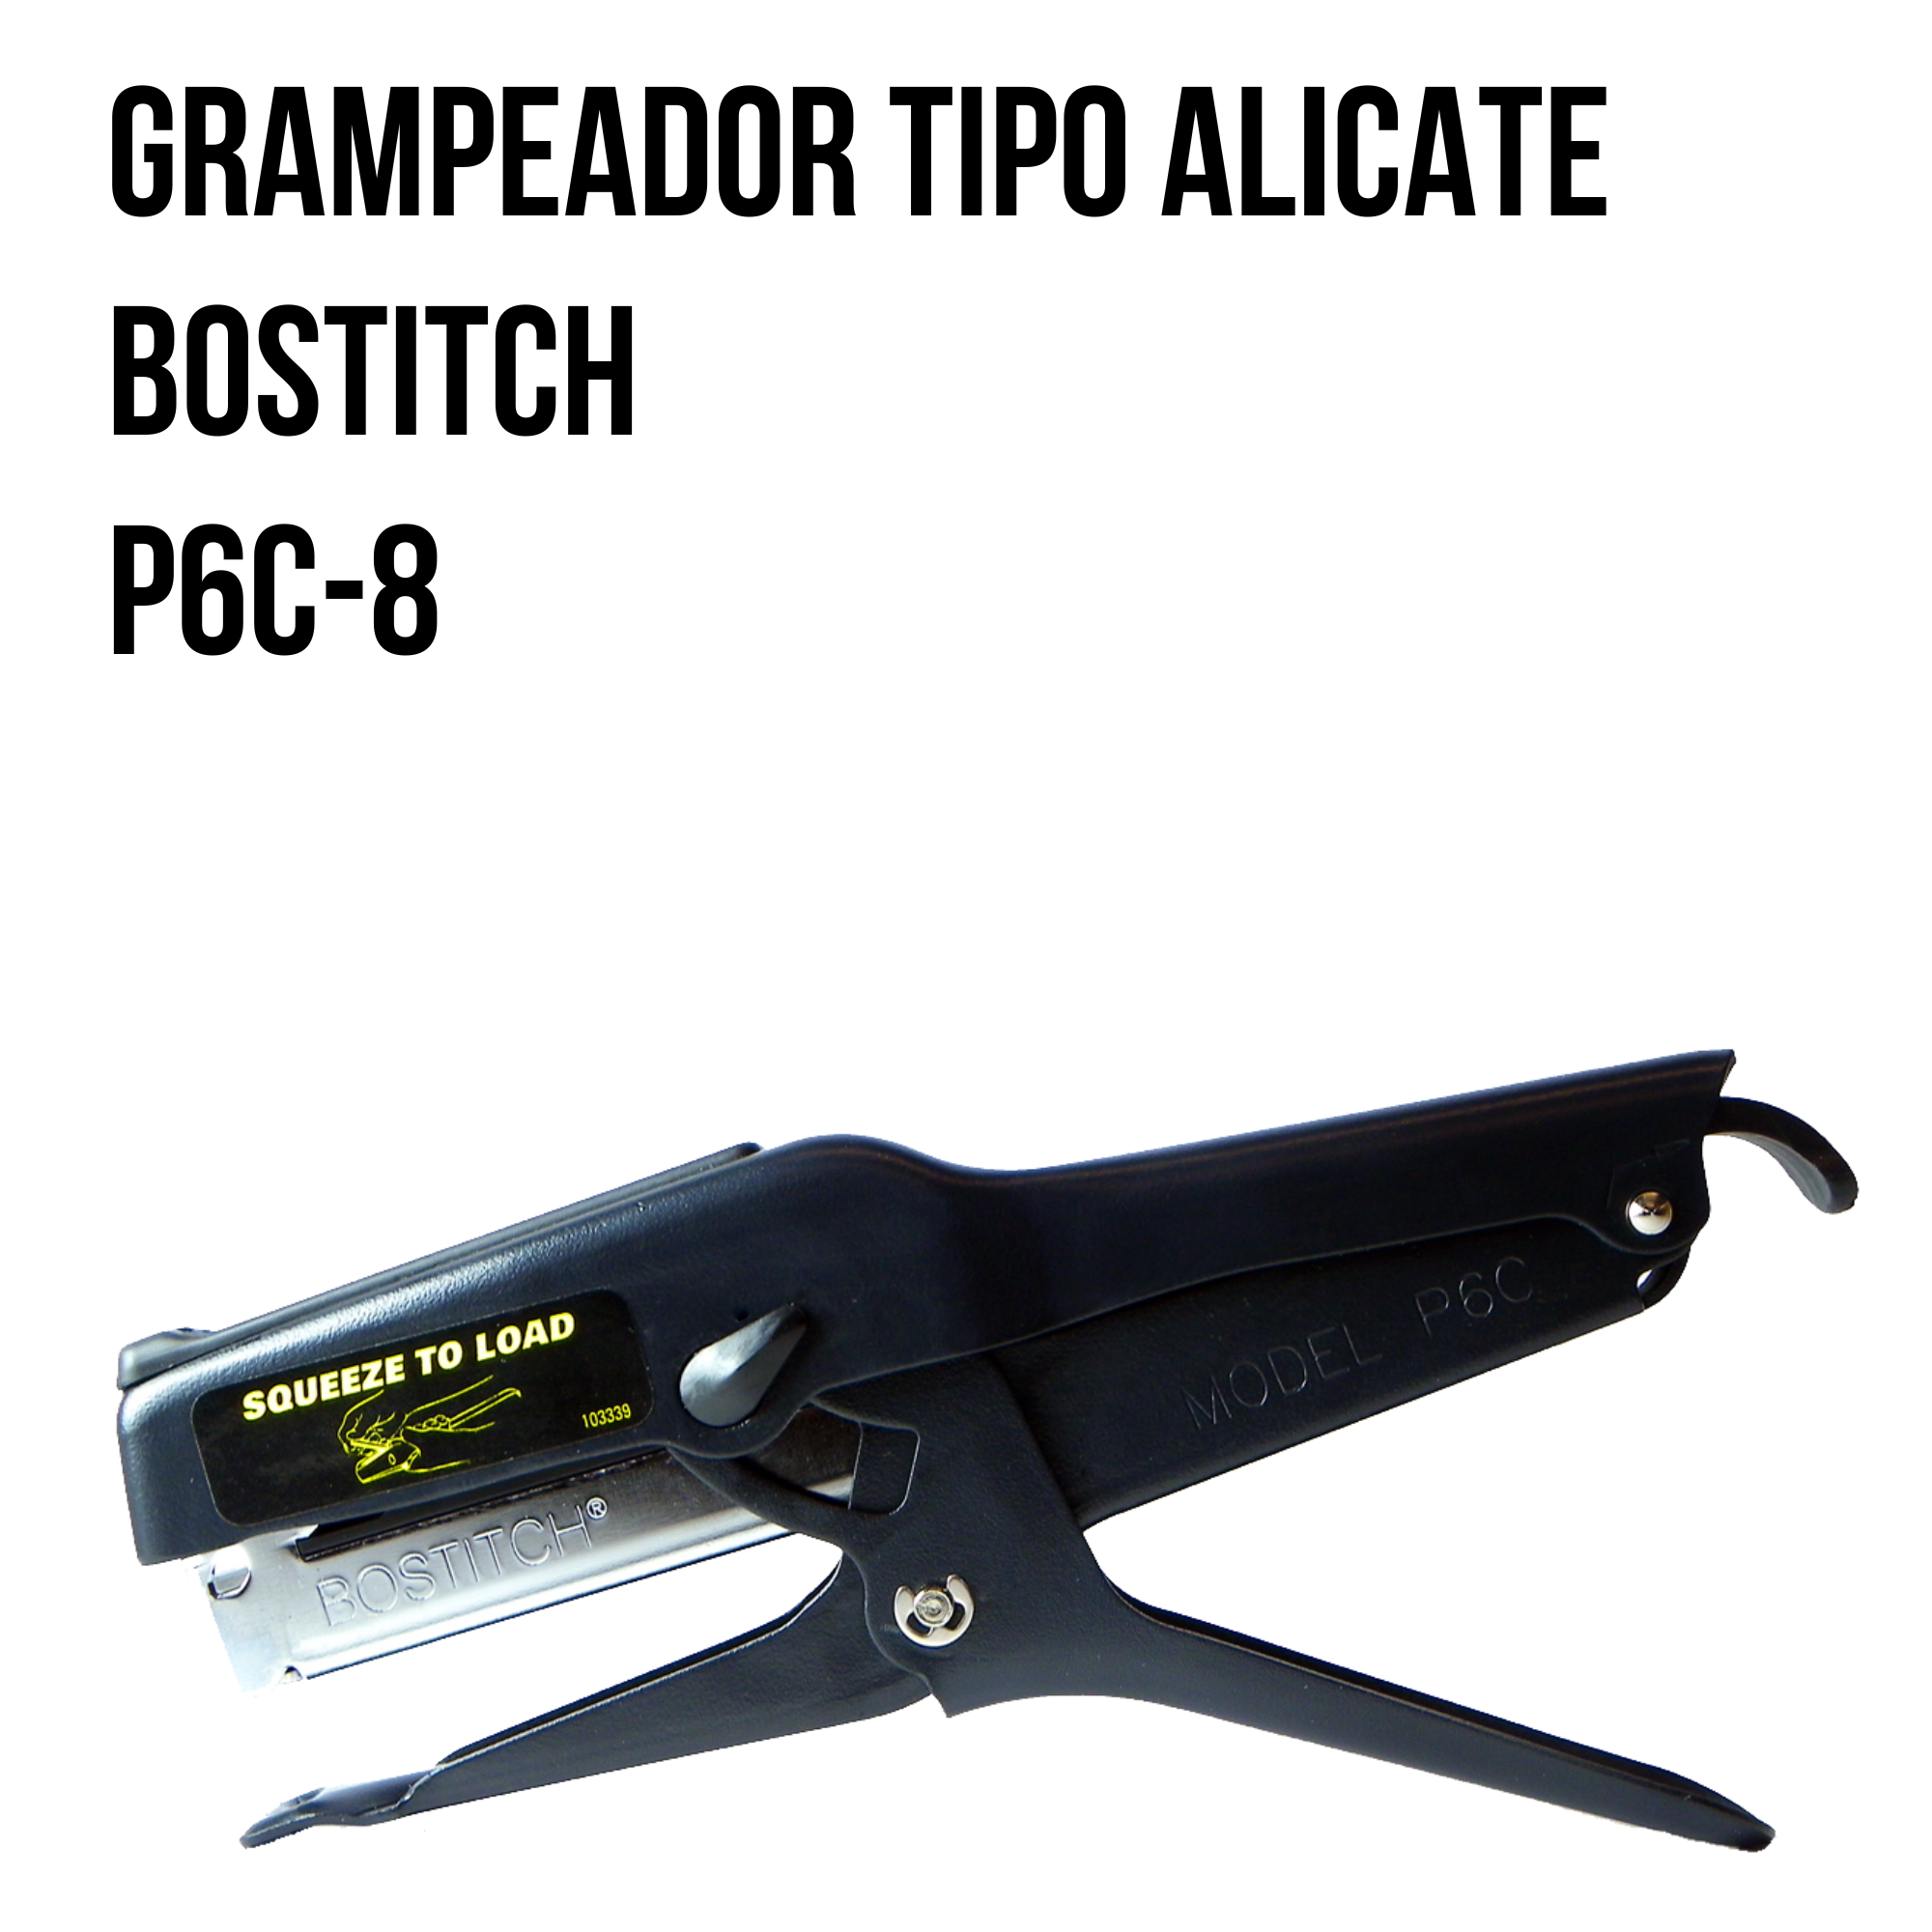 Grampeador Alicate Bostitch P6C-8 (3)